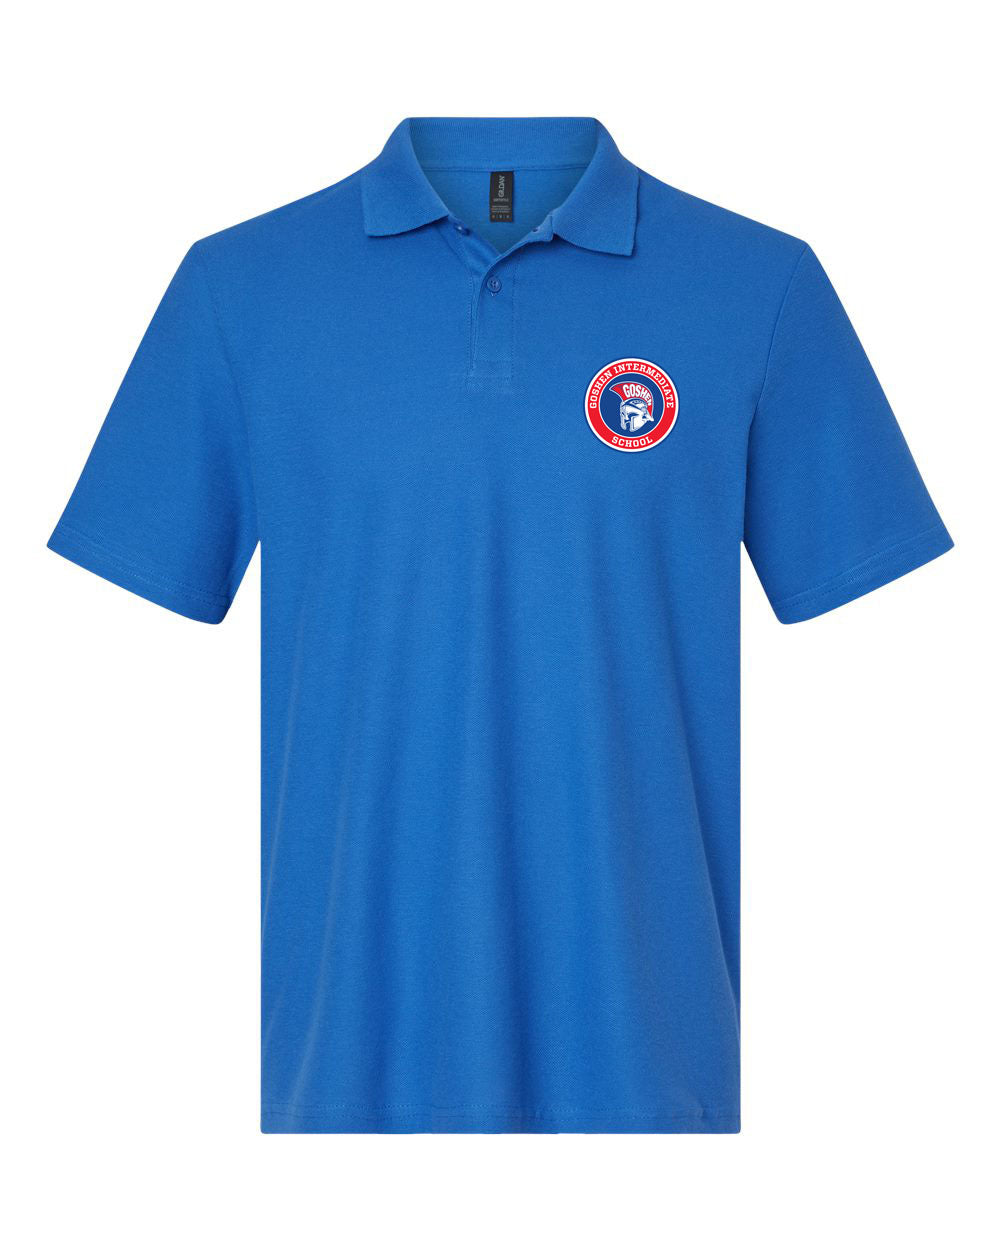 Goshen School Design 1 Polo T-Shirt